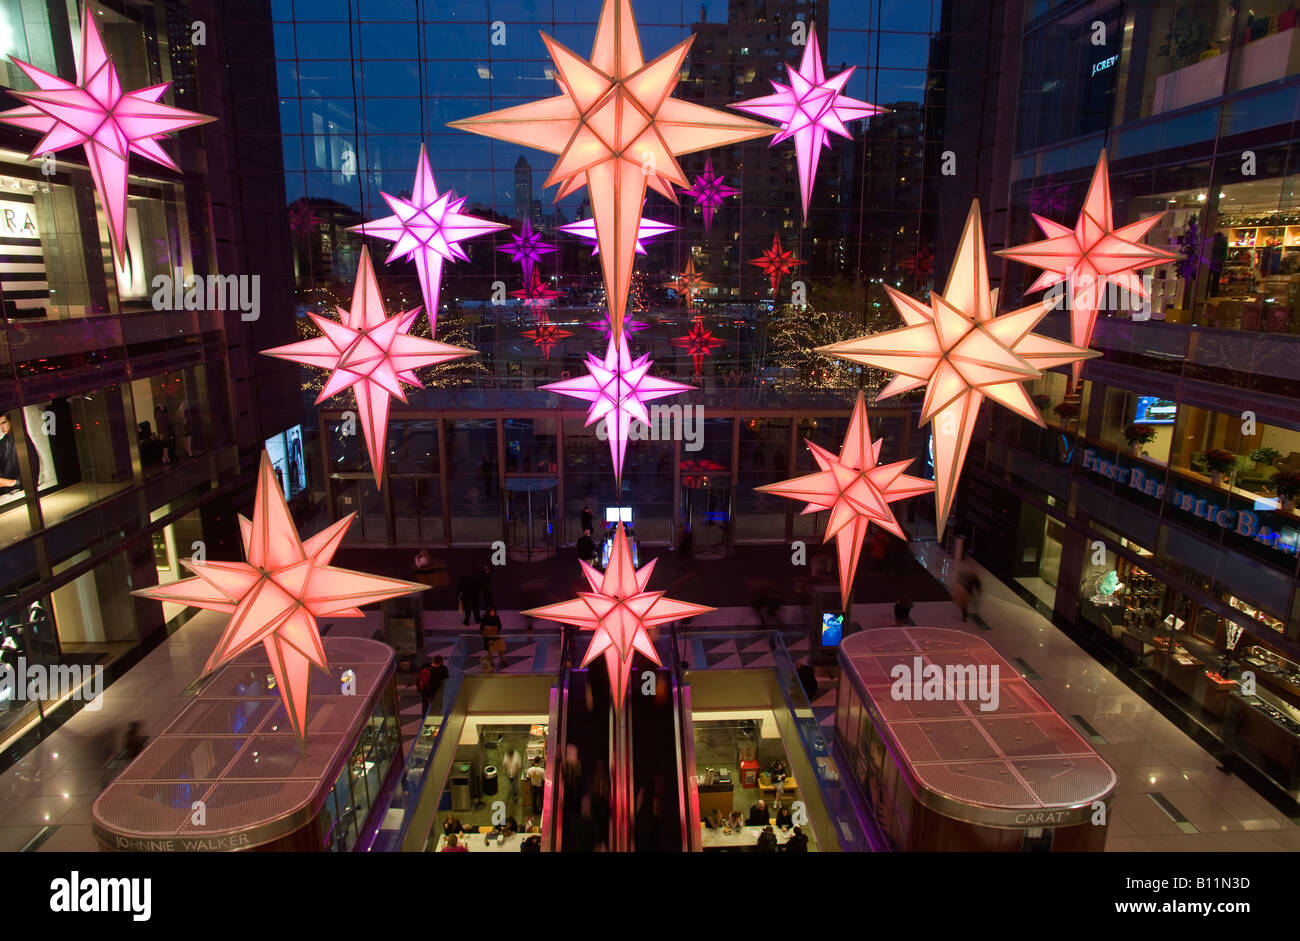 CHRISTMAS STARS ATRIUM TIME WARNER CENTER COLUMBUS CIRCLE MANHATTAN NEW YORK CITY USA Stock Photo